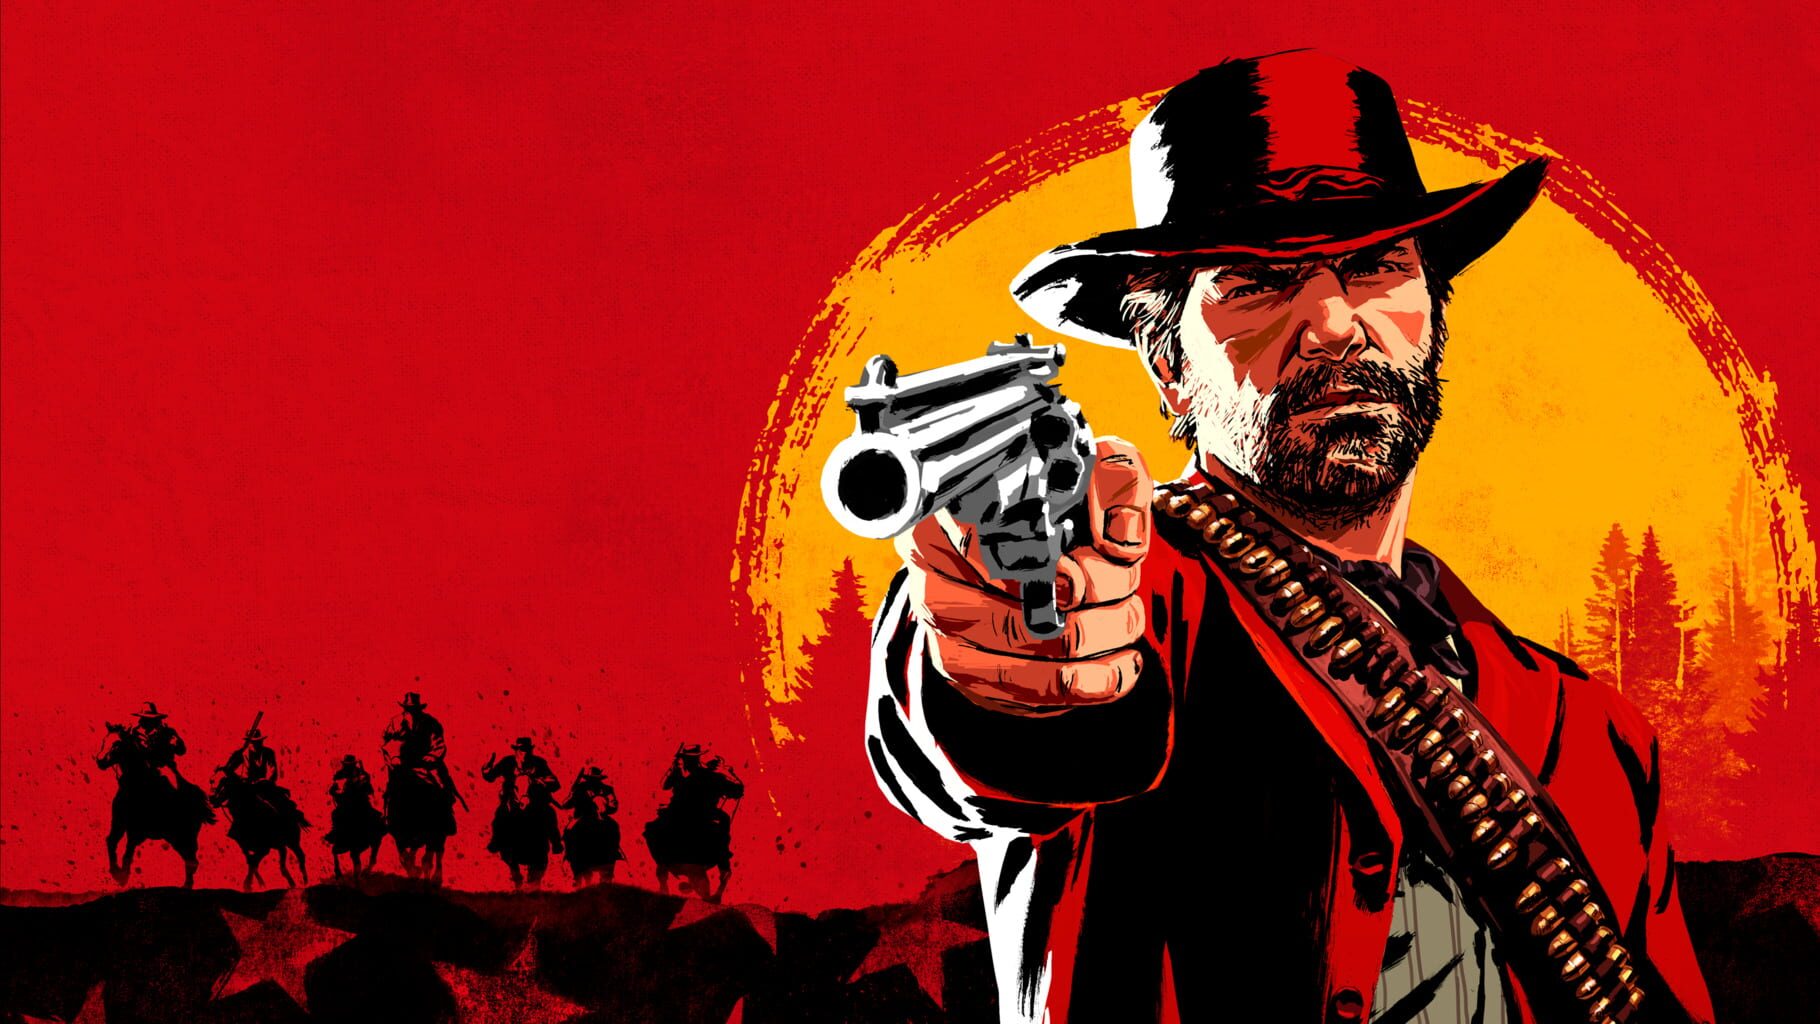 Red Dead Redemption 2 Image